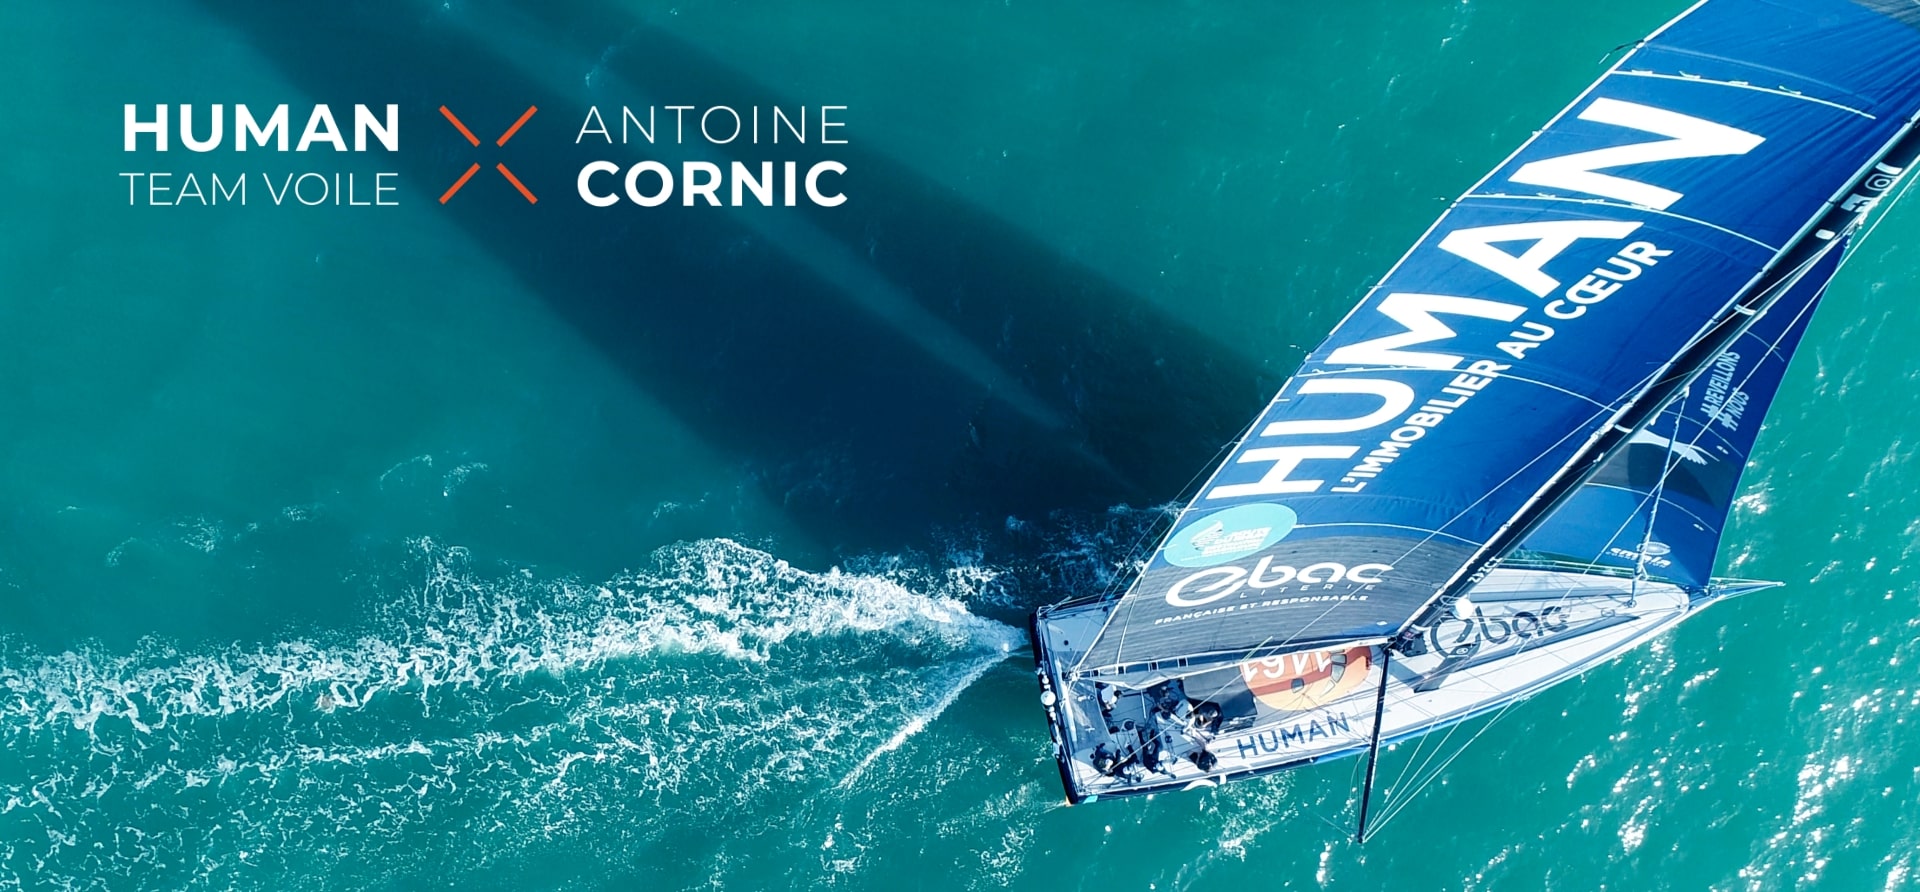 Antoine Cornic bateau